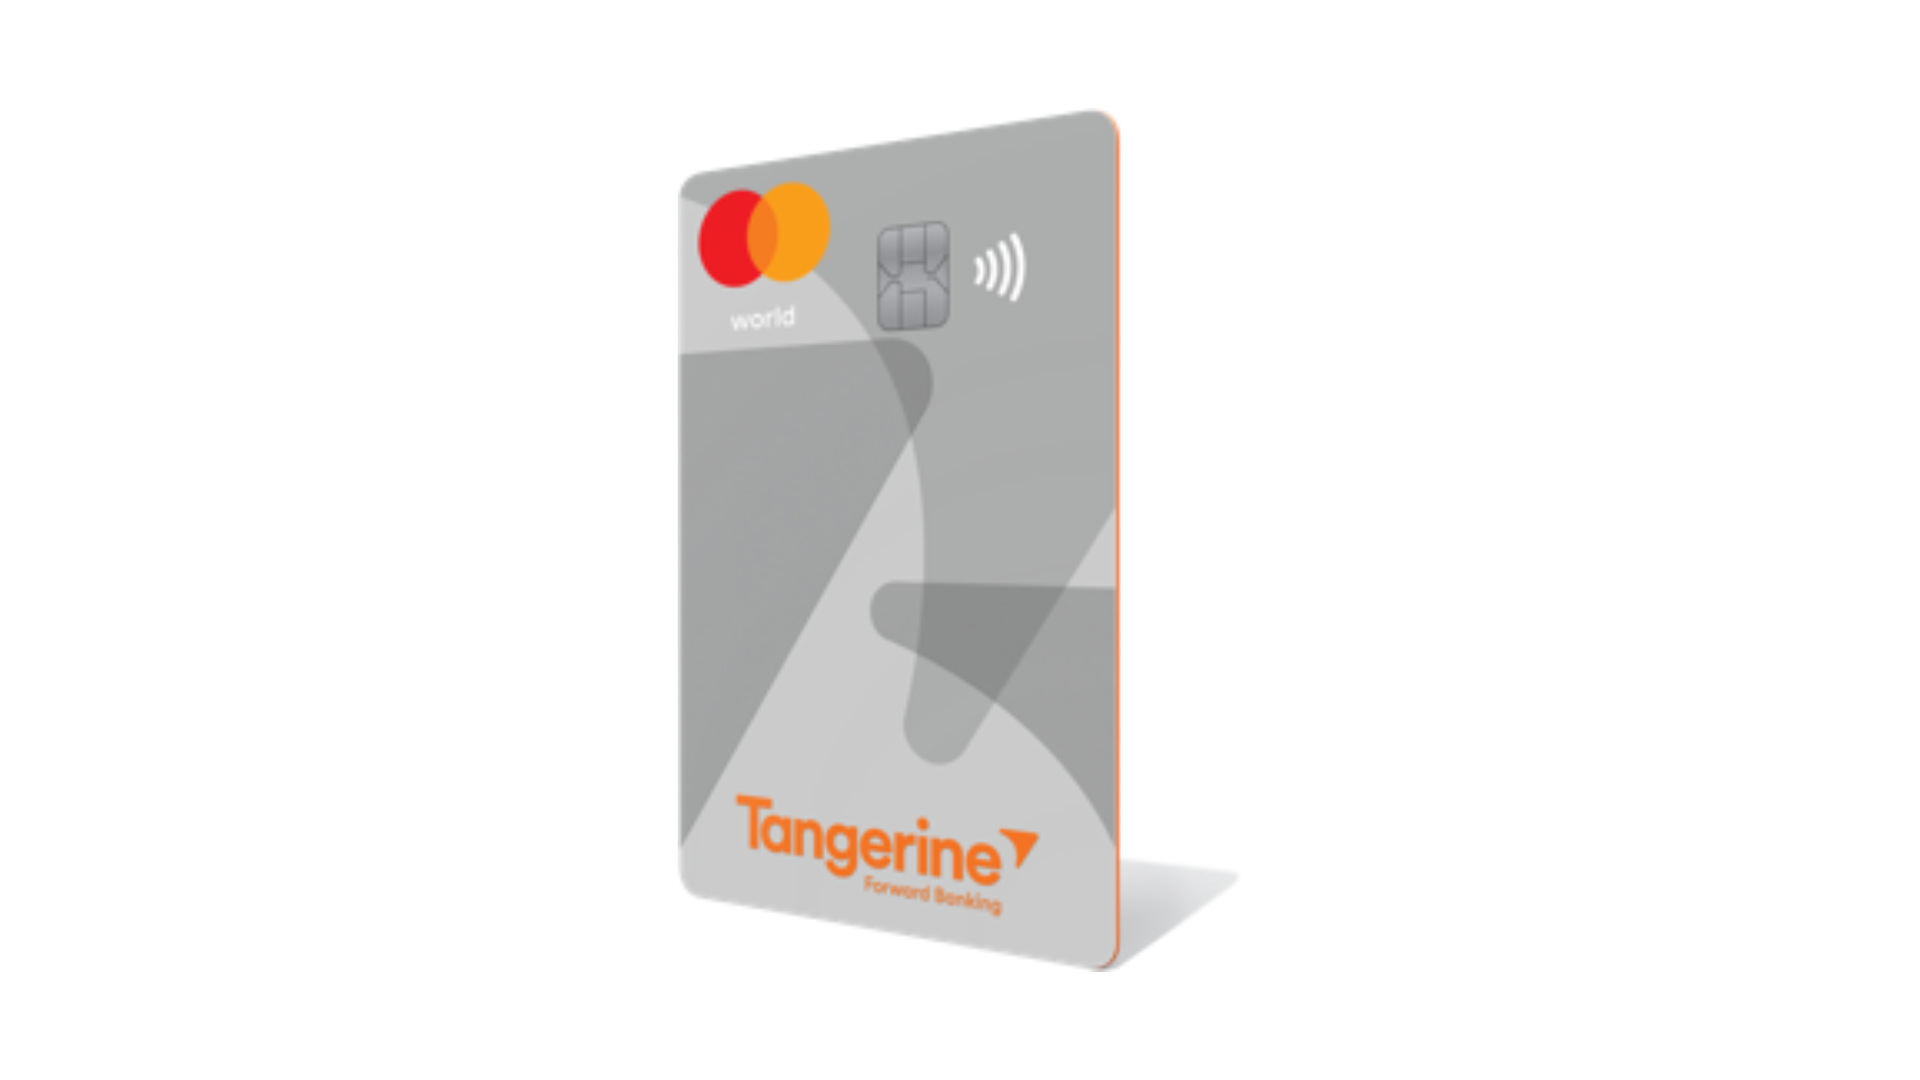 Tangerine World Mastercard® credit card